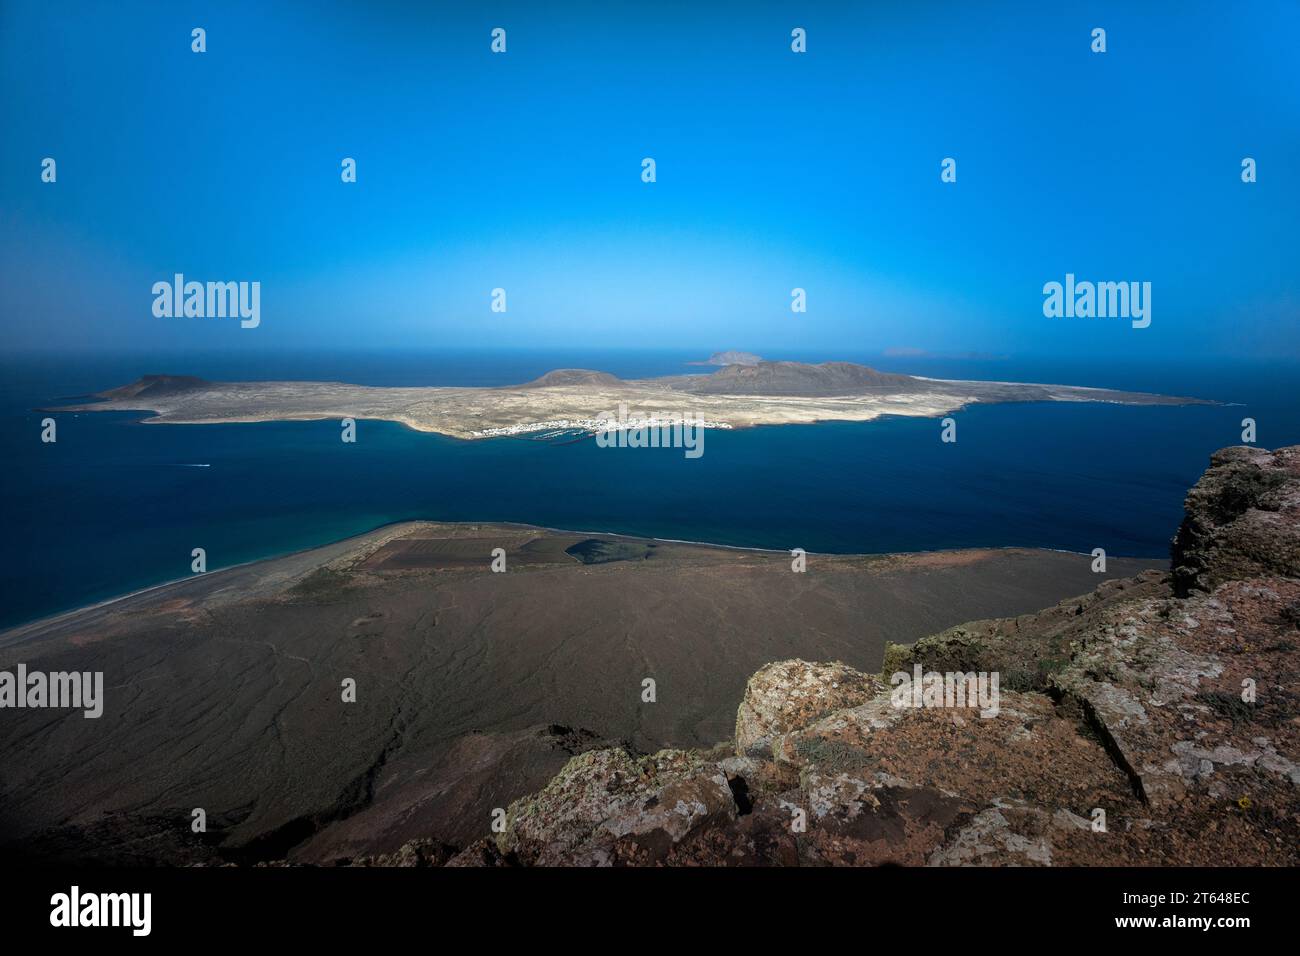 Spain, Canary Islands, La Graciosa: aerial view of the Graciosa island from the Mirador del Rio of the island of Lanzarote Stock Photo